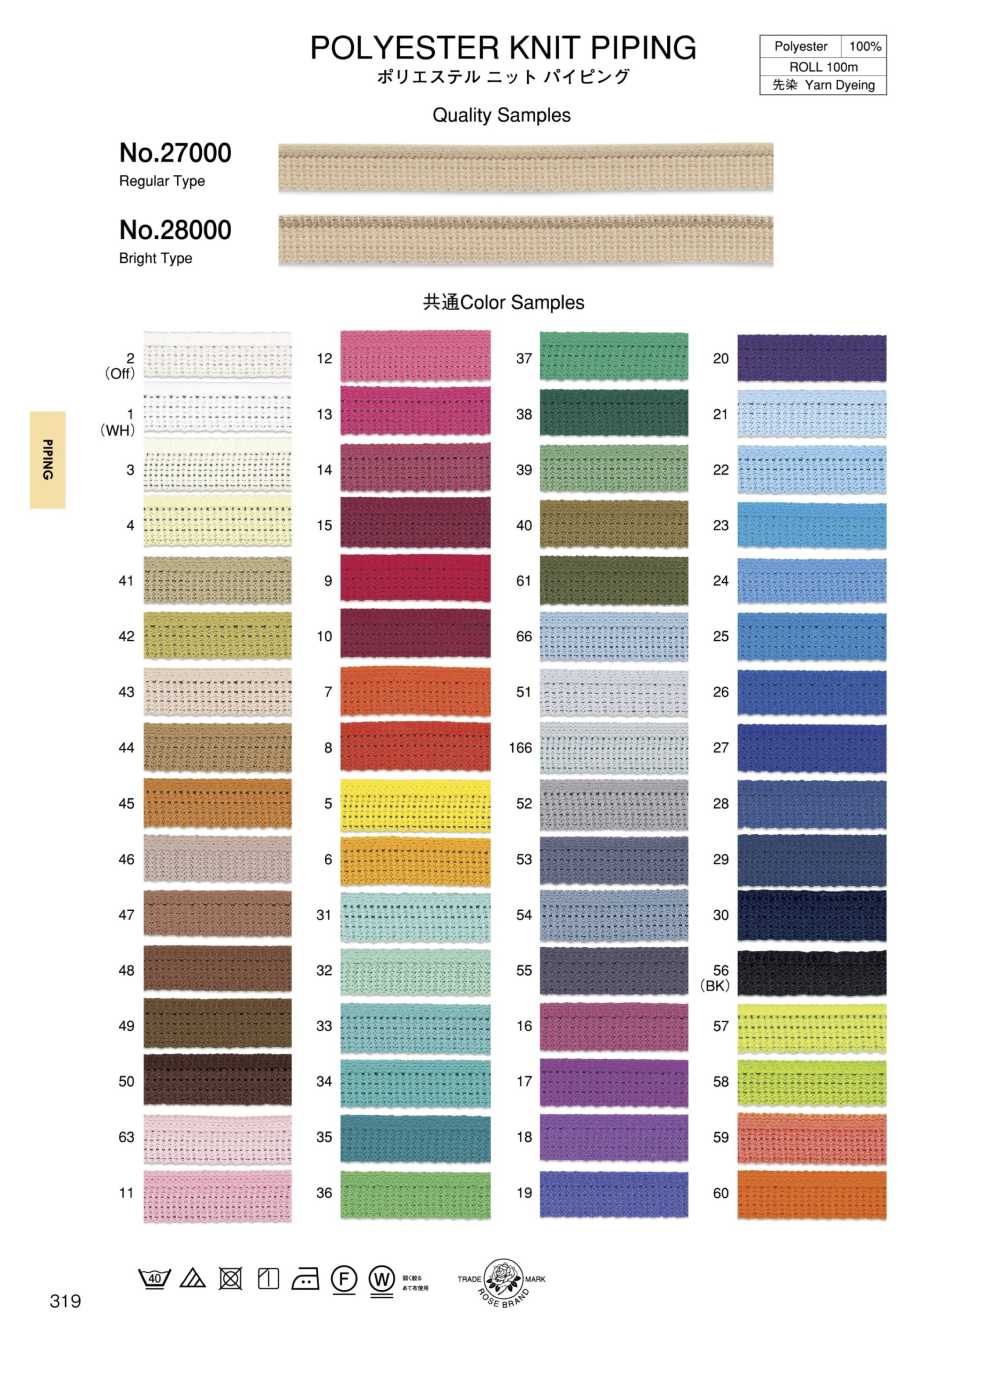 27000 Polyester Knit Piping (Regular Type)[Ribbon Tape Cord] ROSE BRAND (Marushin)